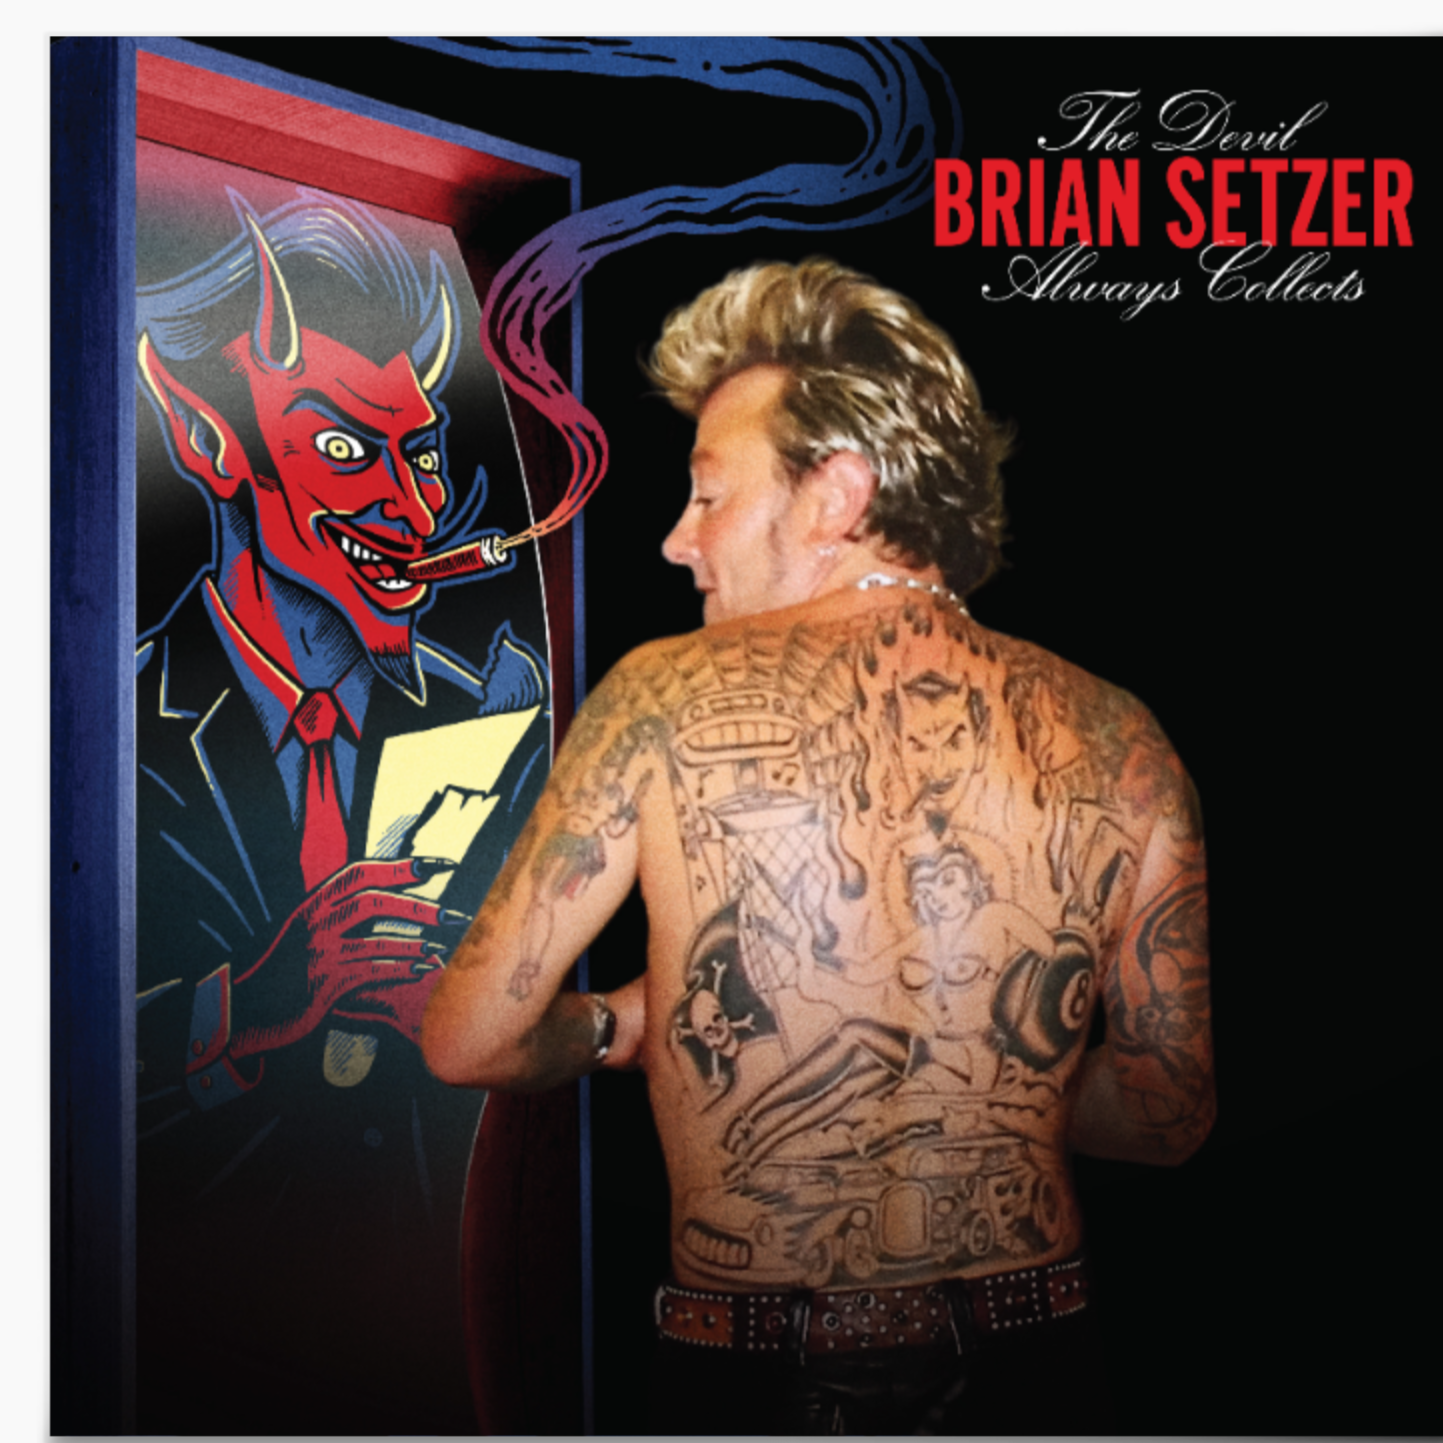 Brian Setzer "The Devil Always Collects" CD